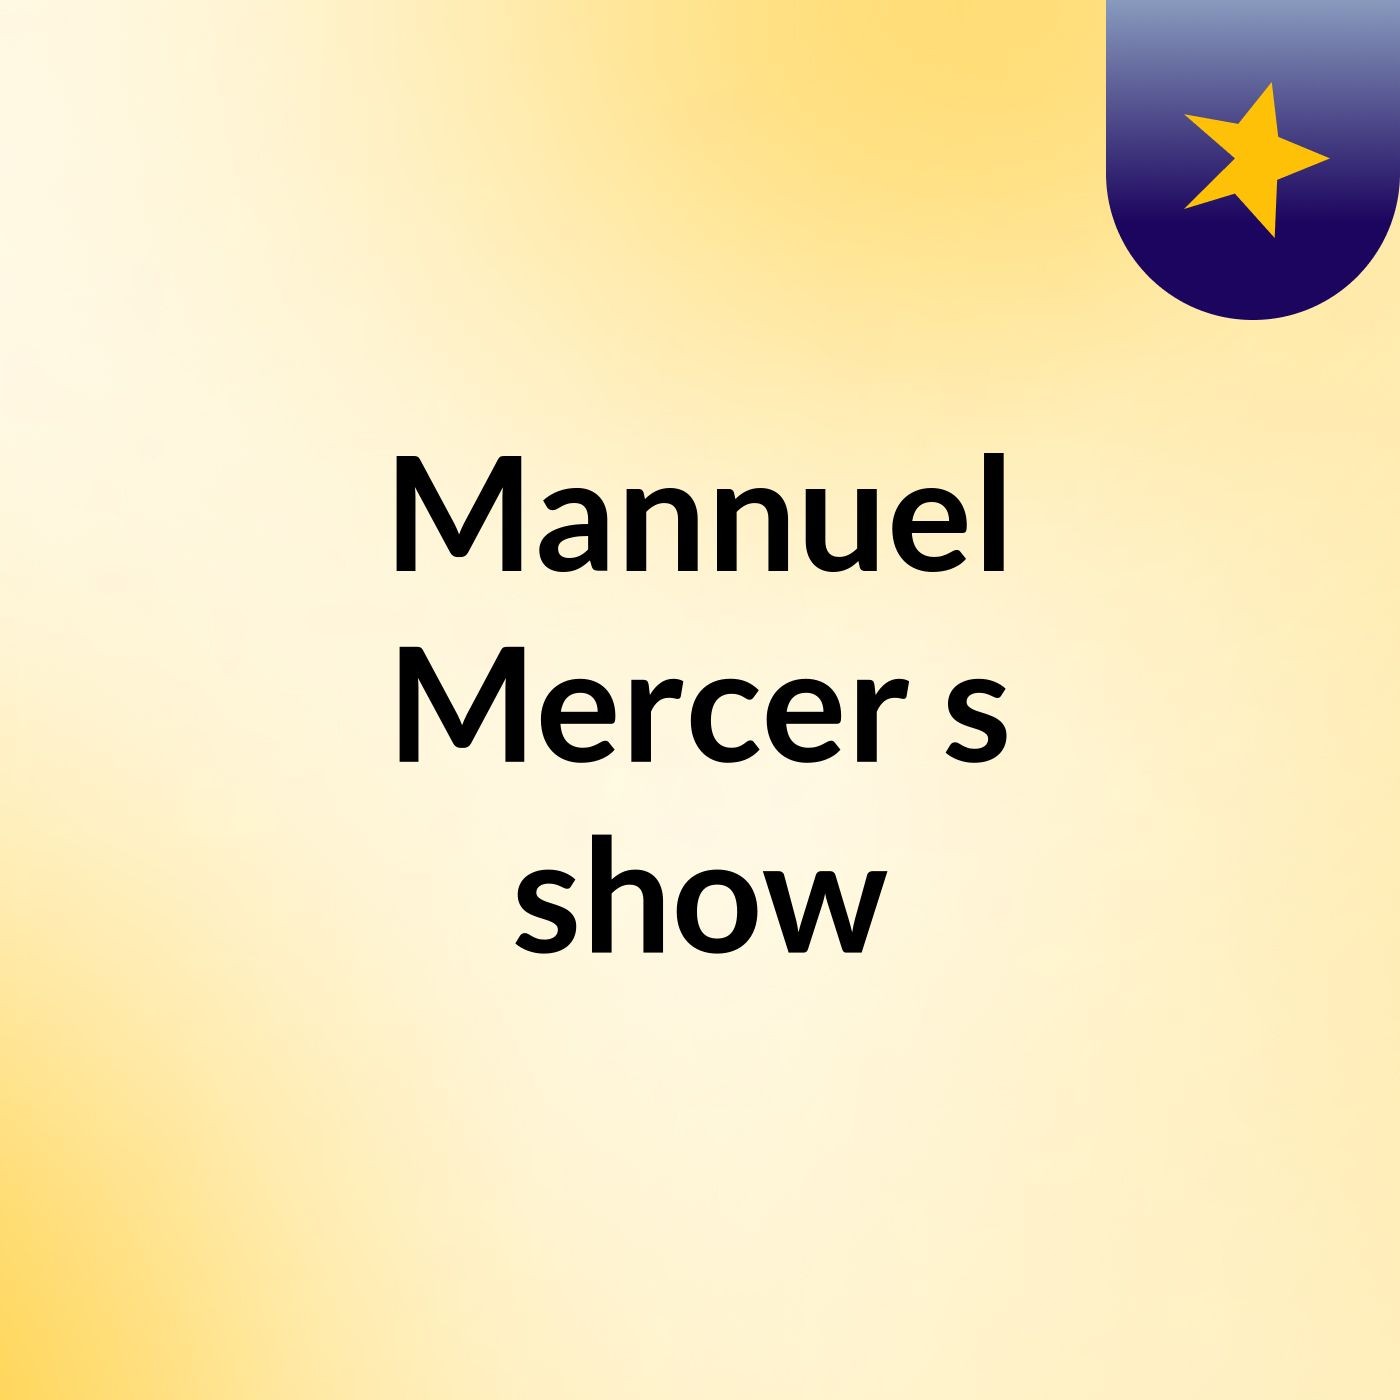 Mannuel Mercer's show